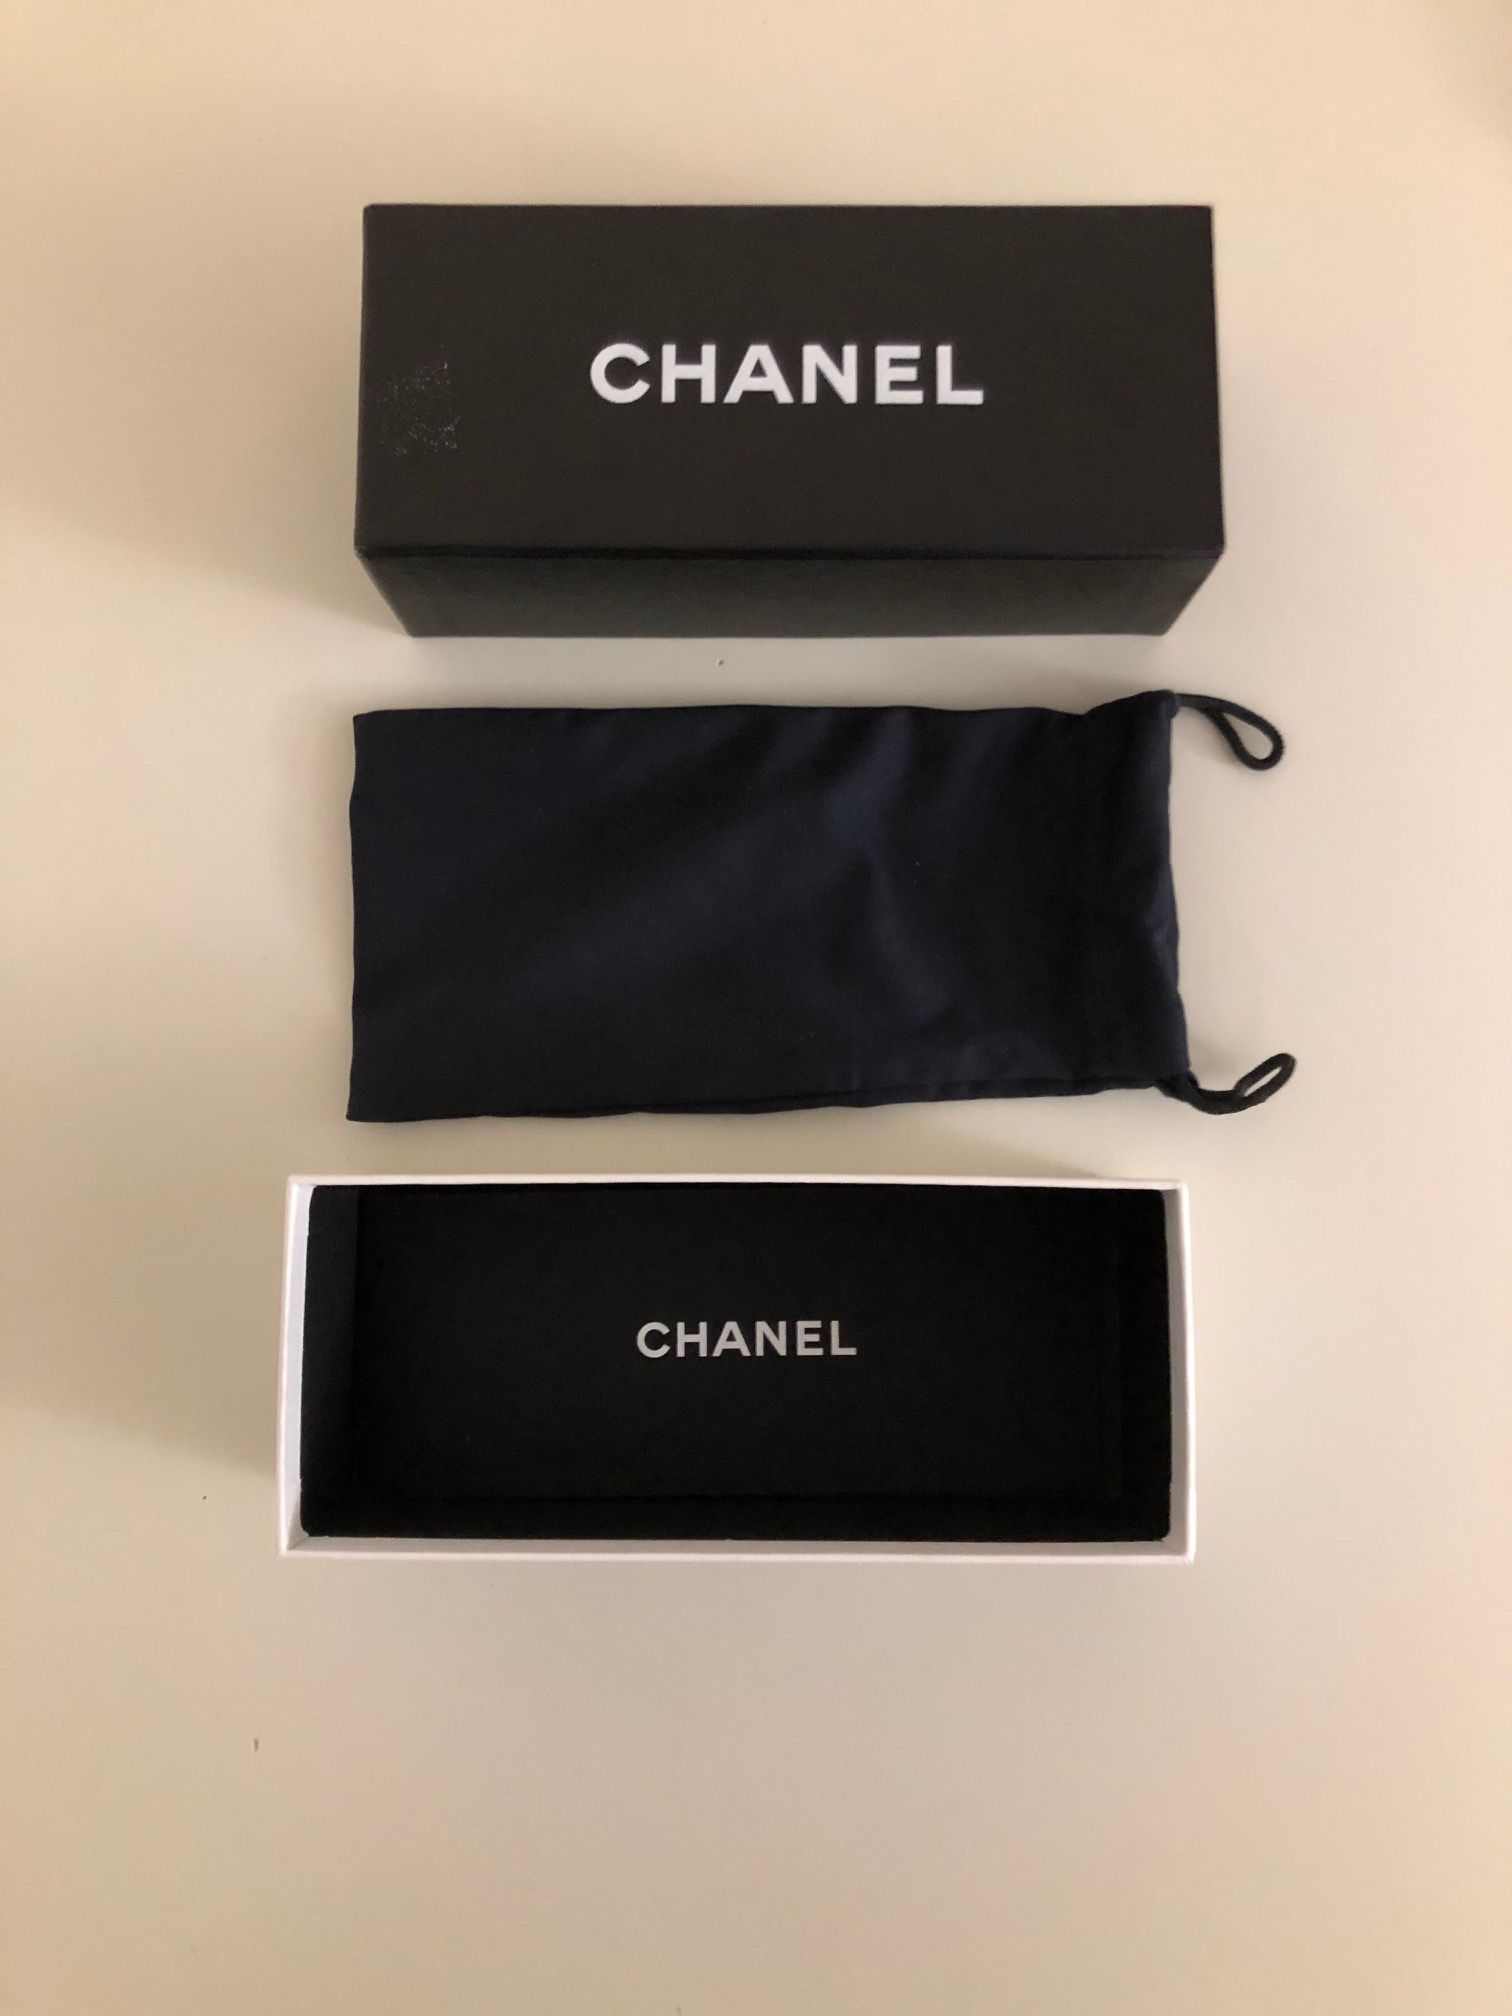 Chanel Glasses Box - Authentic